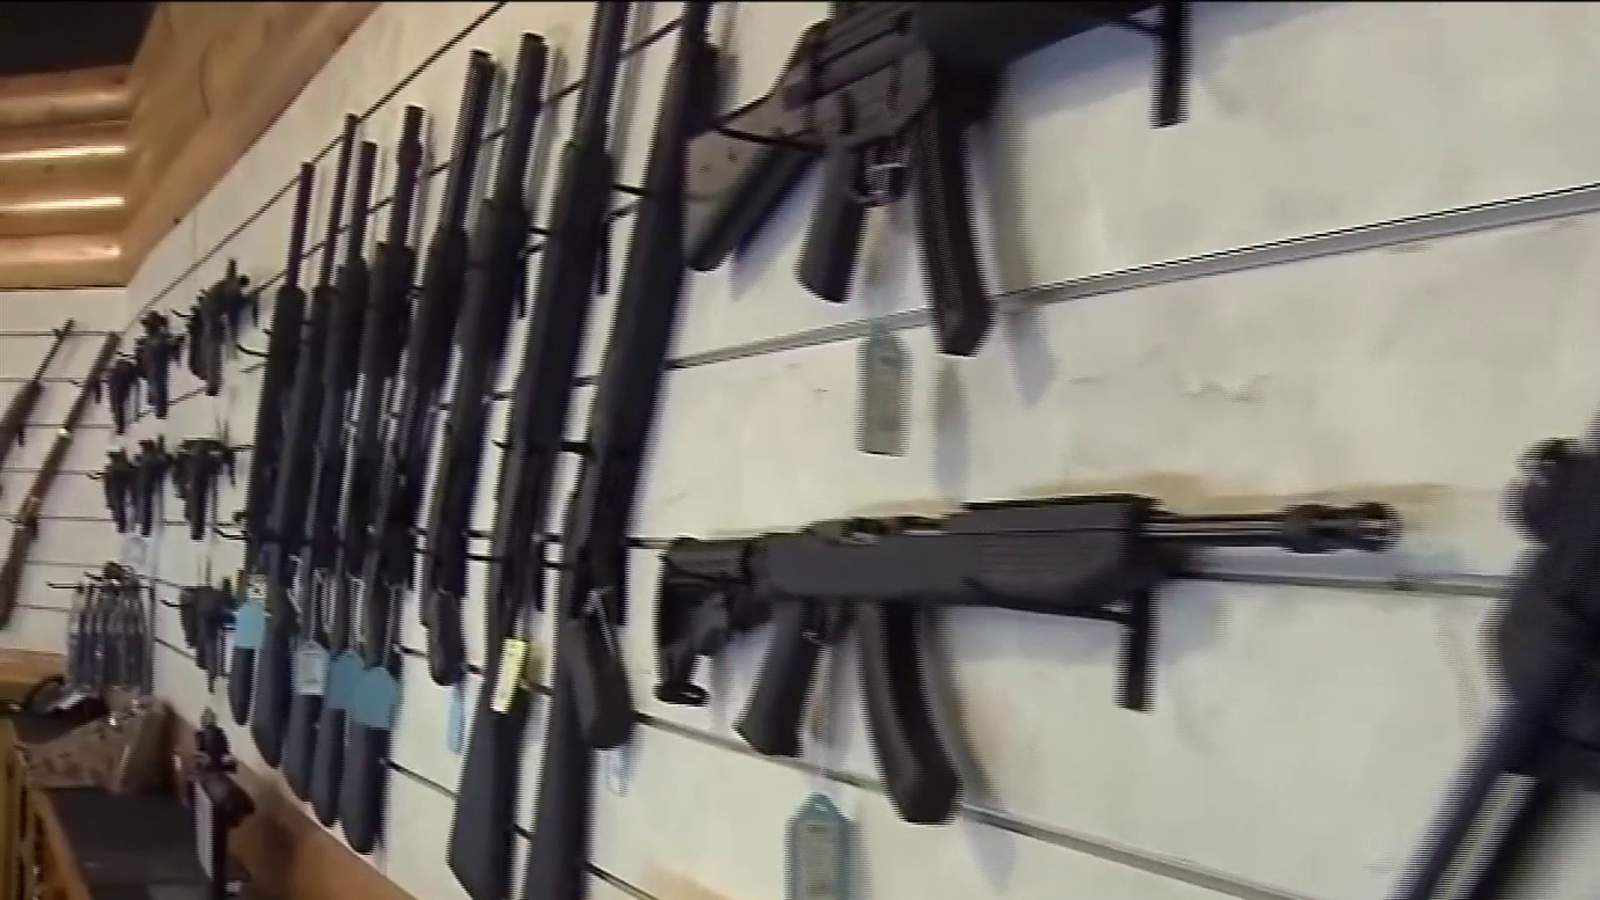 Blacksburg community has mixed reactions to town’s gun ban